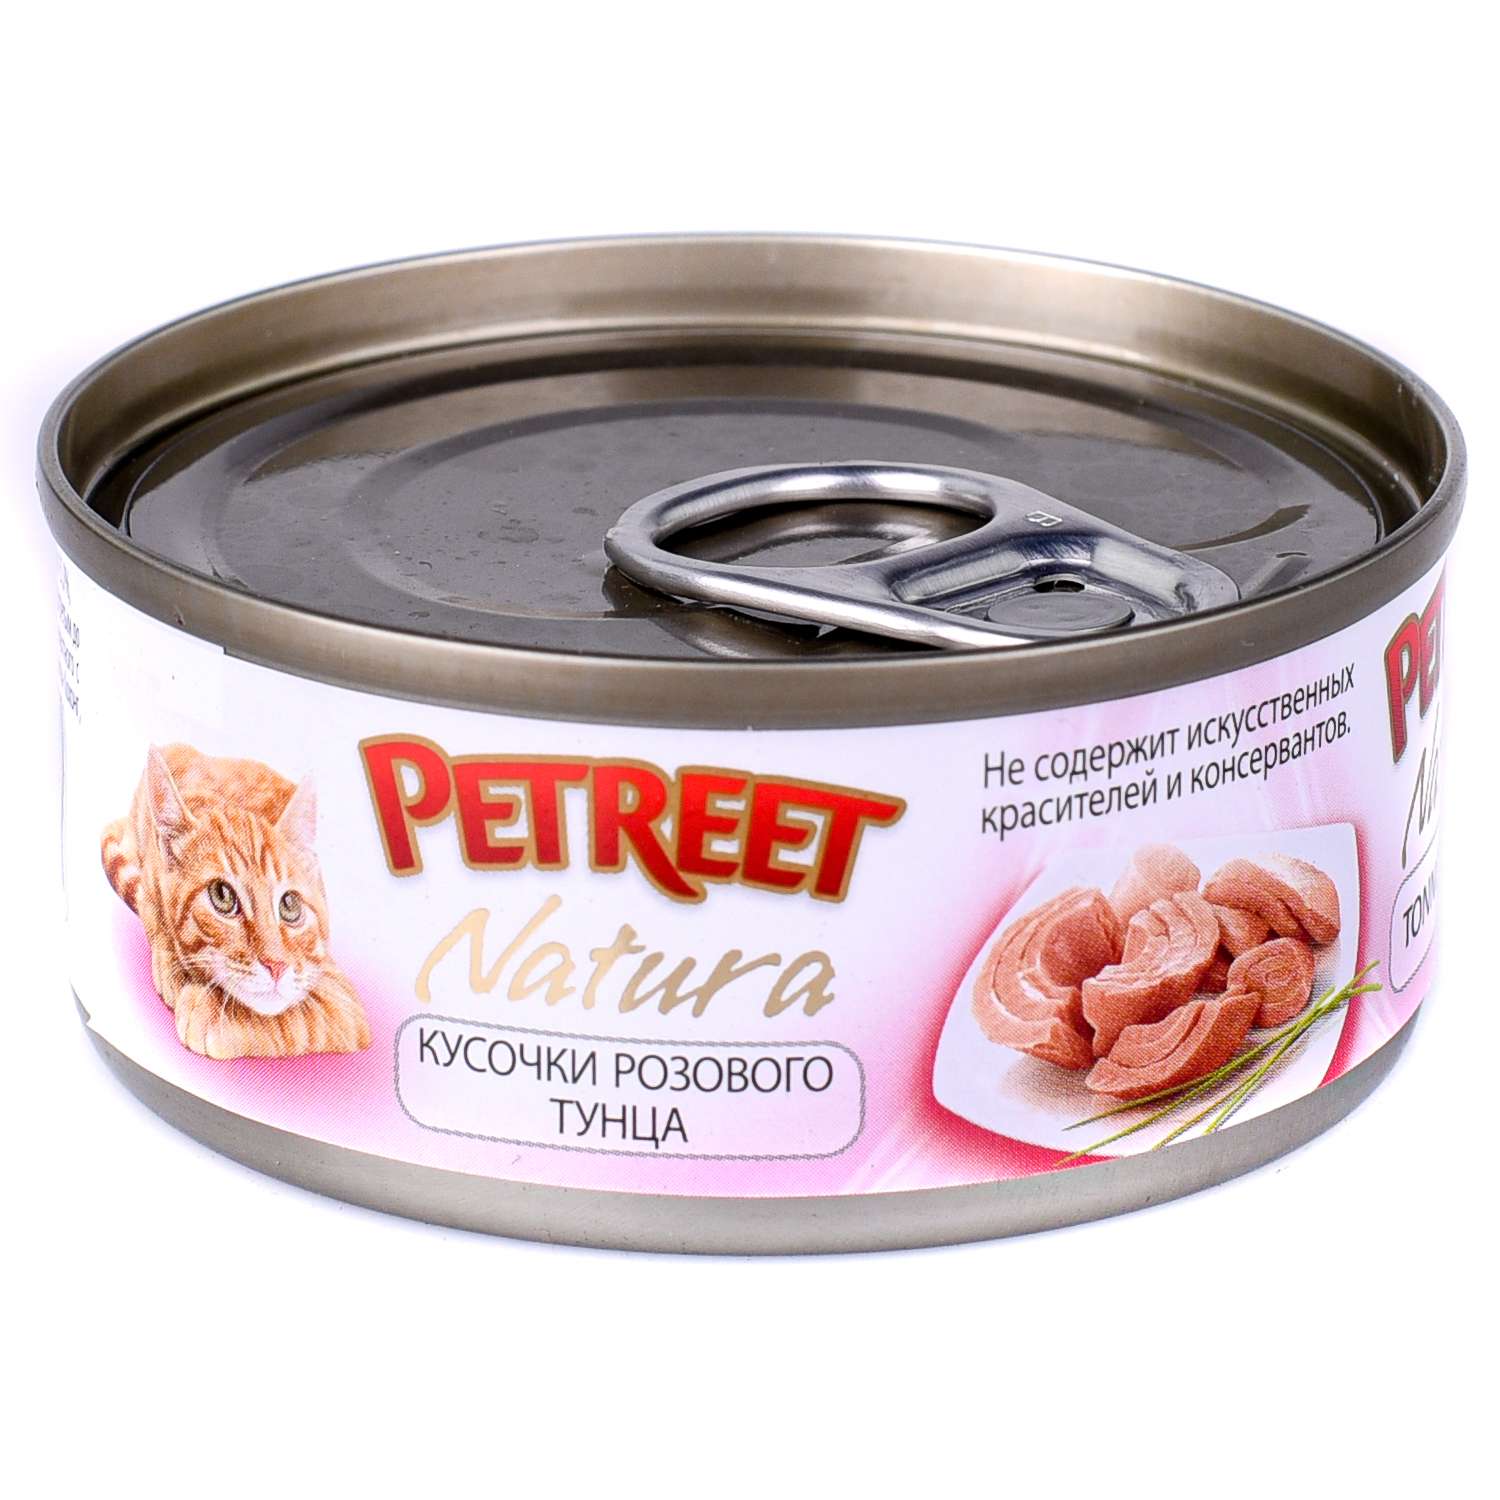 Корм влажный для кошек Petreet 70г кусочки розового тунца консервированный - фото 2